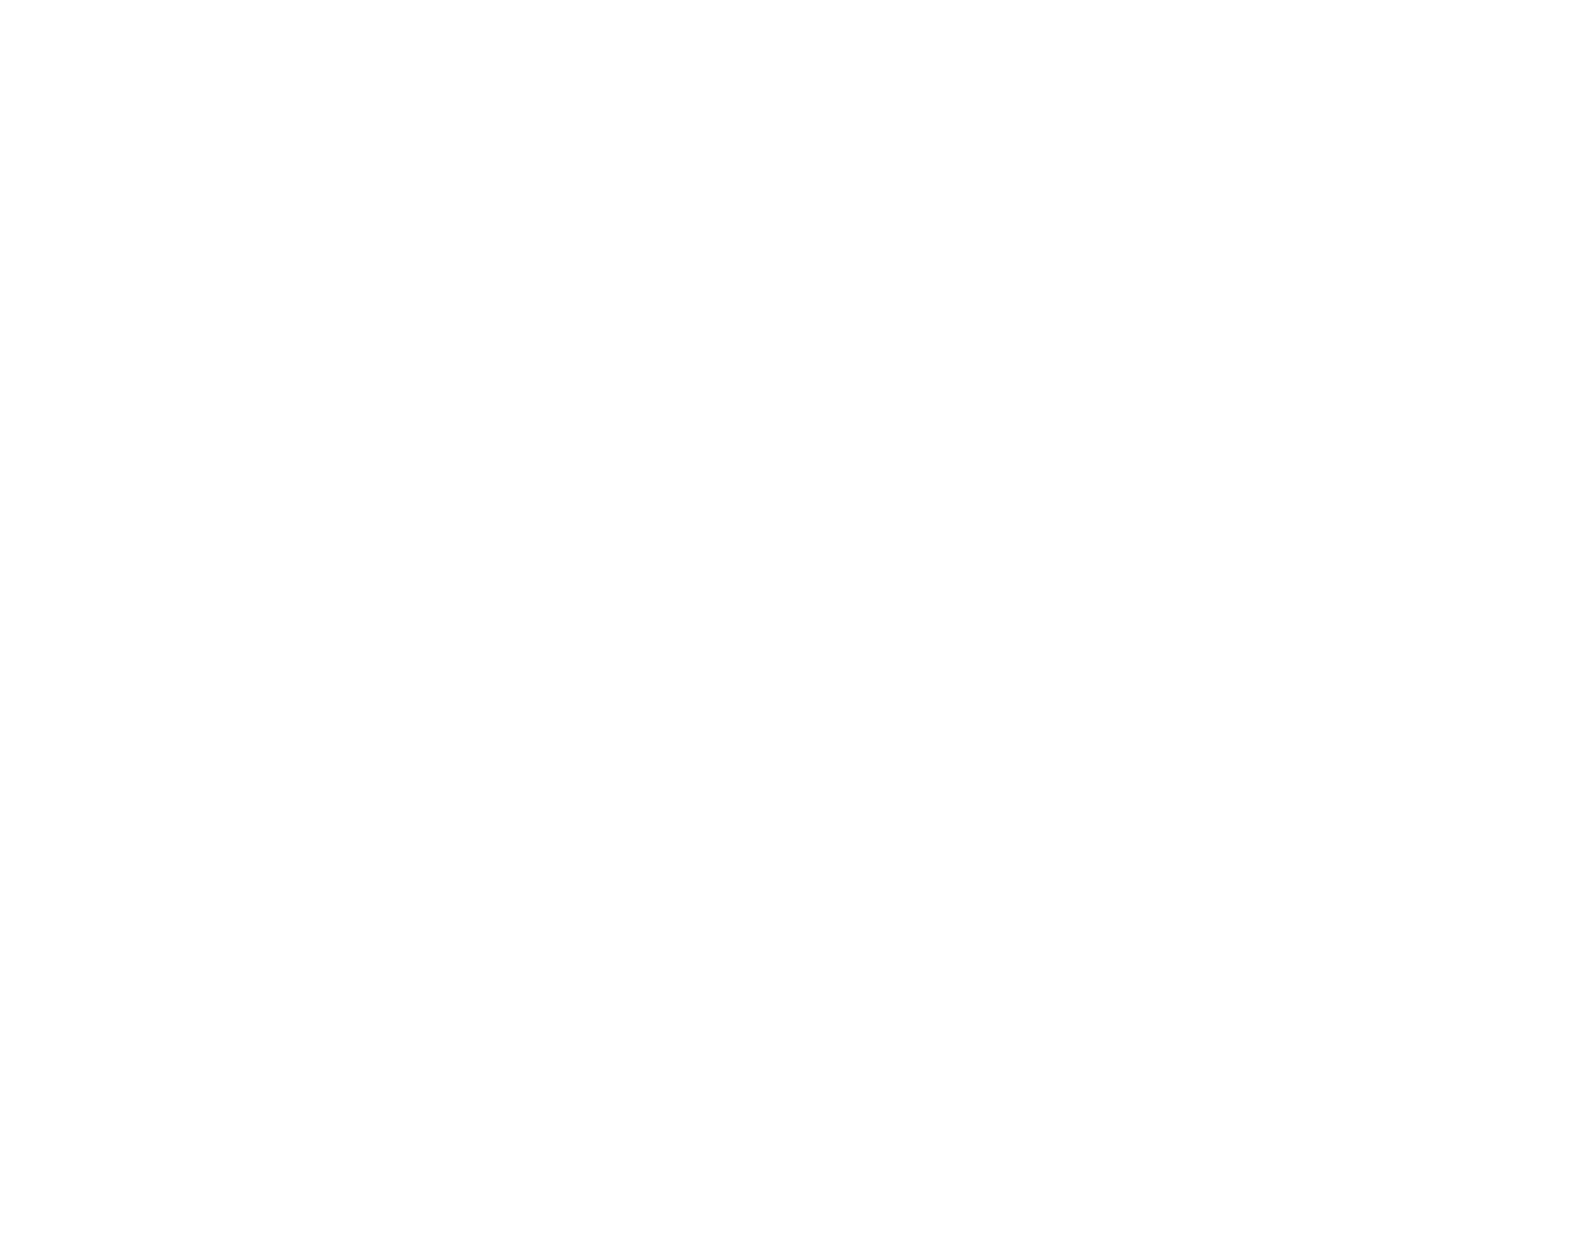 Dechra Pharmaceuticals logo large for dark backgrounds (transparent PNG)